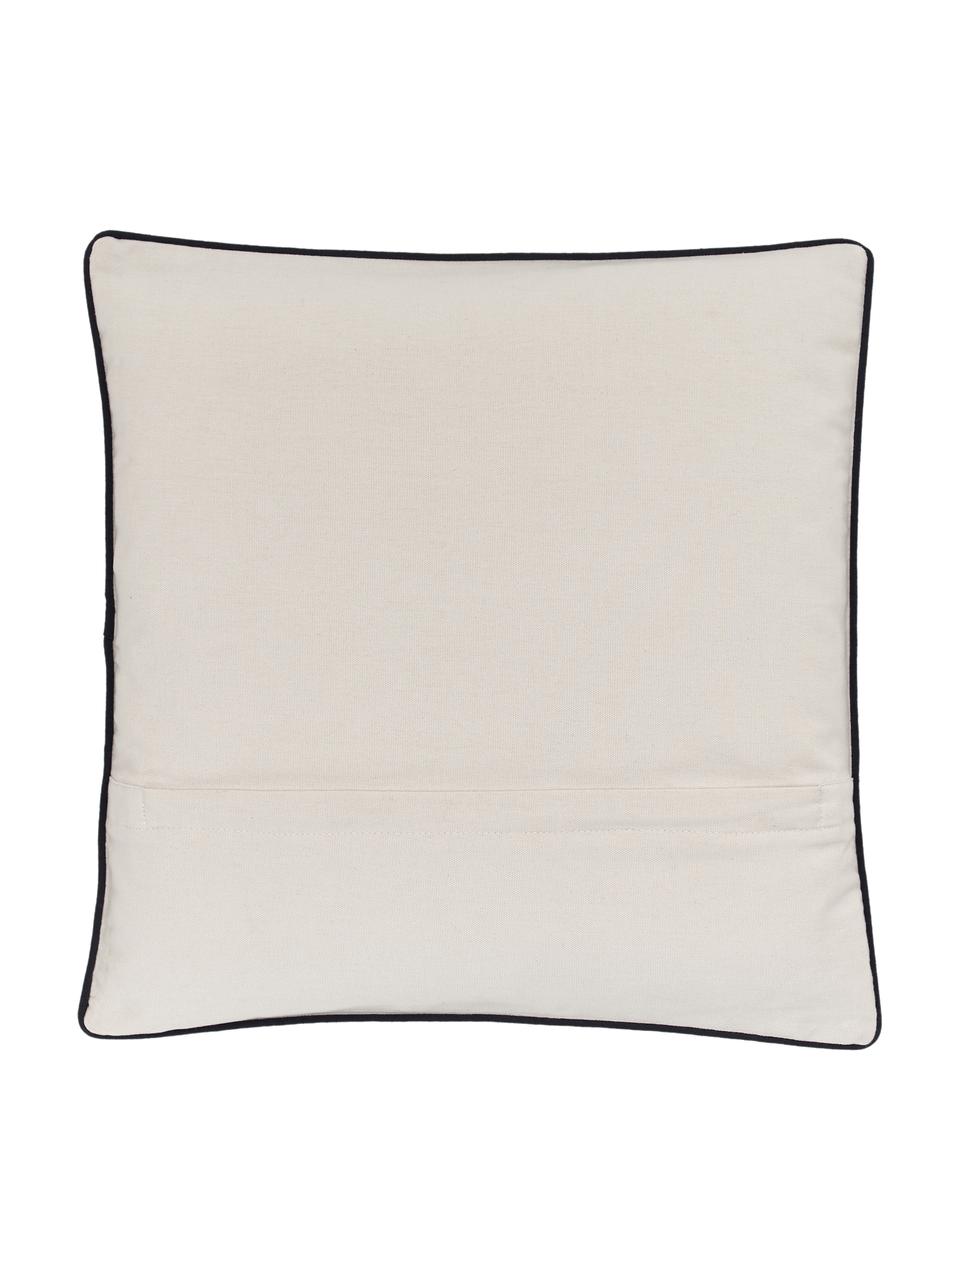 Bavlněný povlak na polštář v etno stylu Maja, 100 % bavlna, Béžová, více barev, vzor, Š 45 cm, D 45 cm